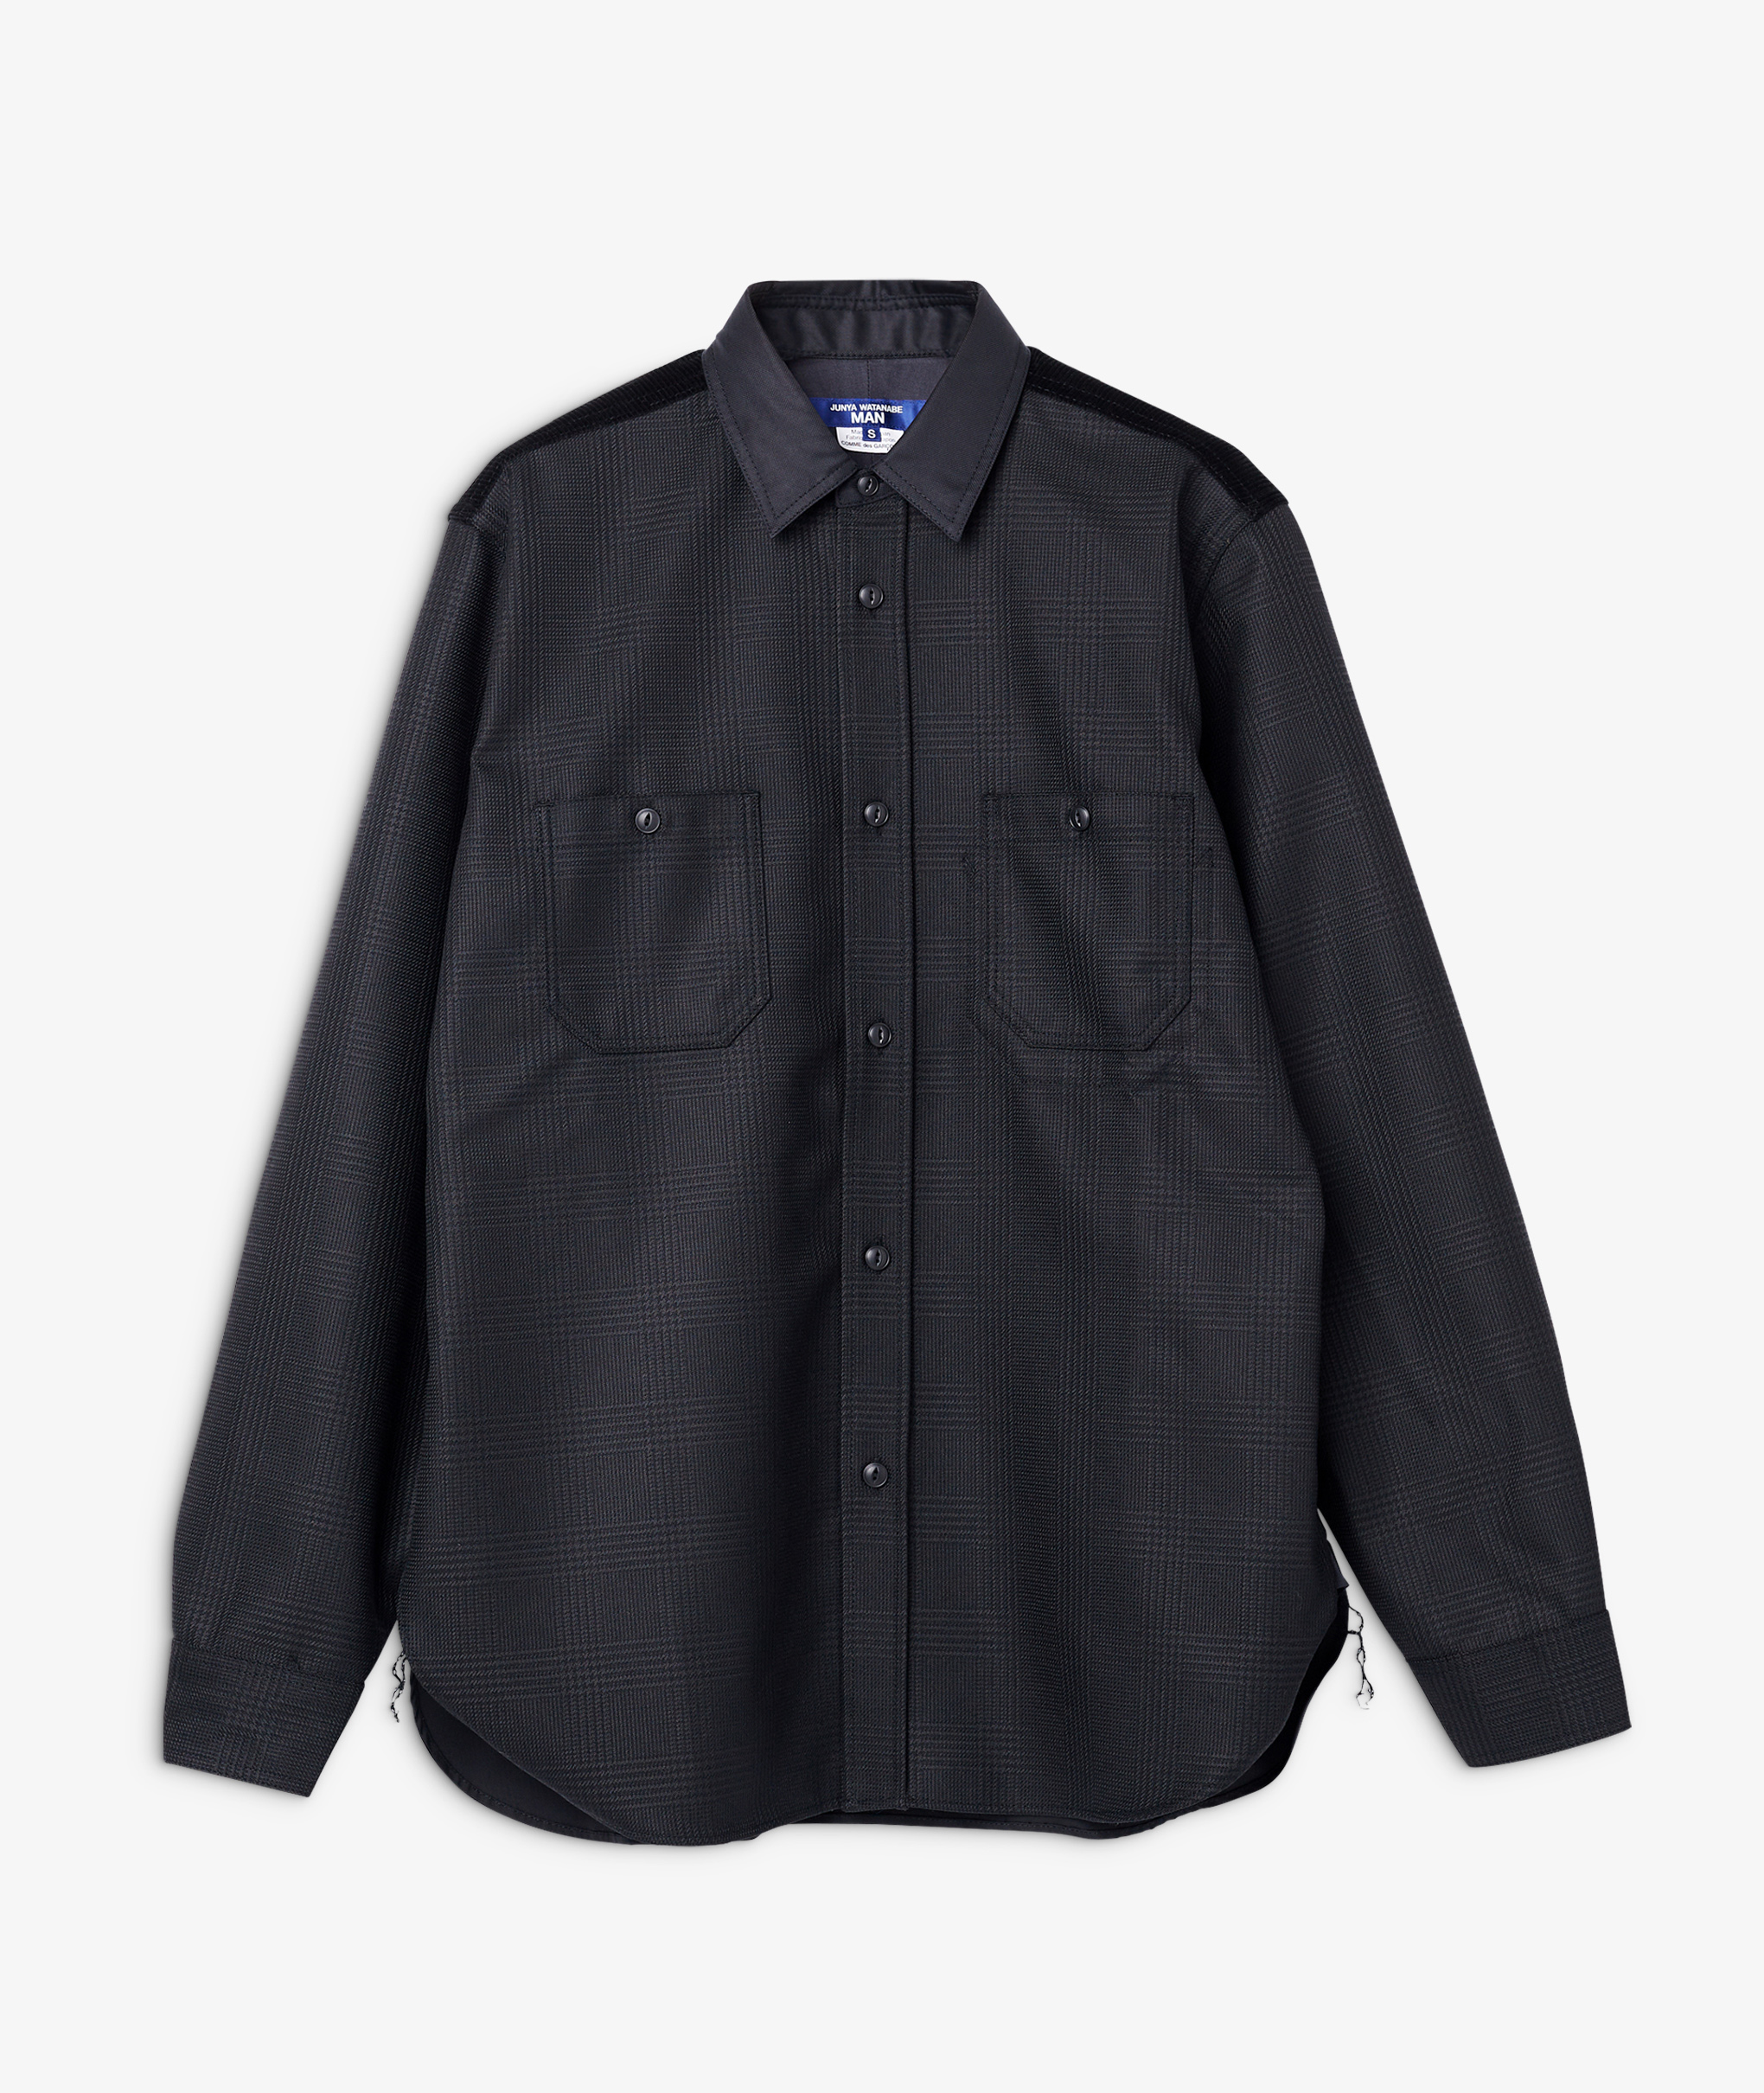 Norse Store | Shipping Worldwide - Junya Watanabe MAN Men's Pocket Shirt -  Black